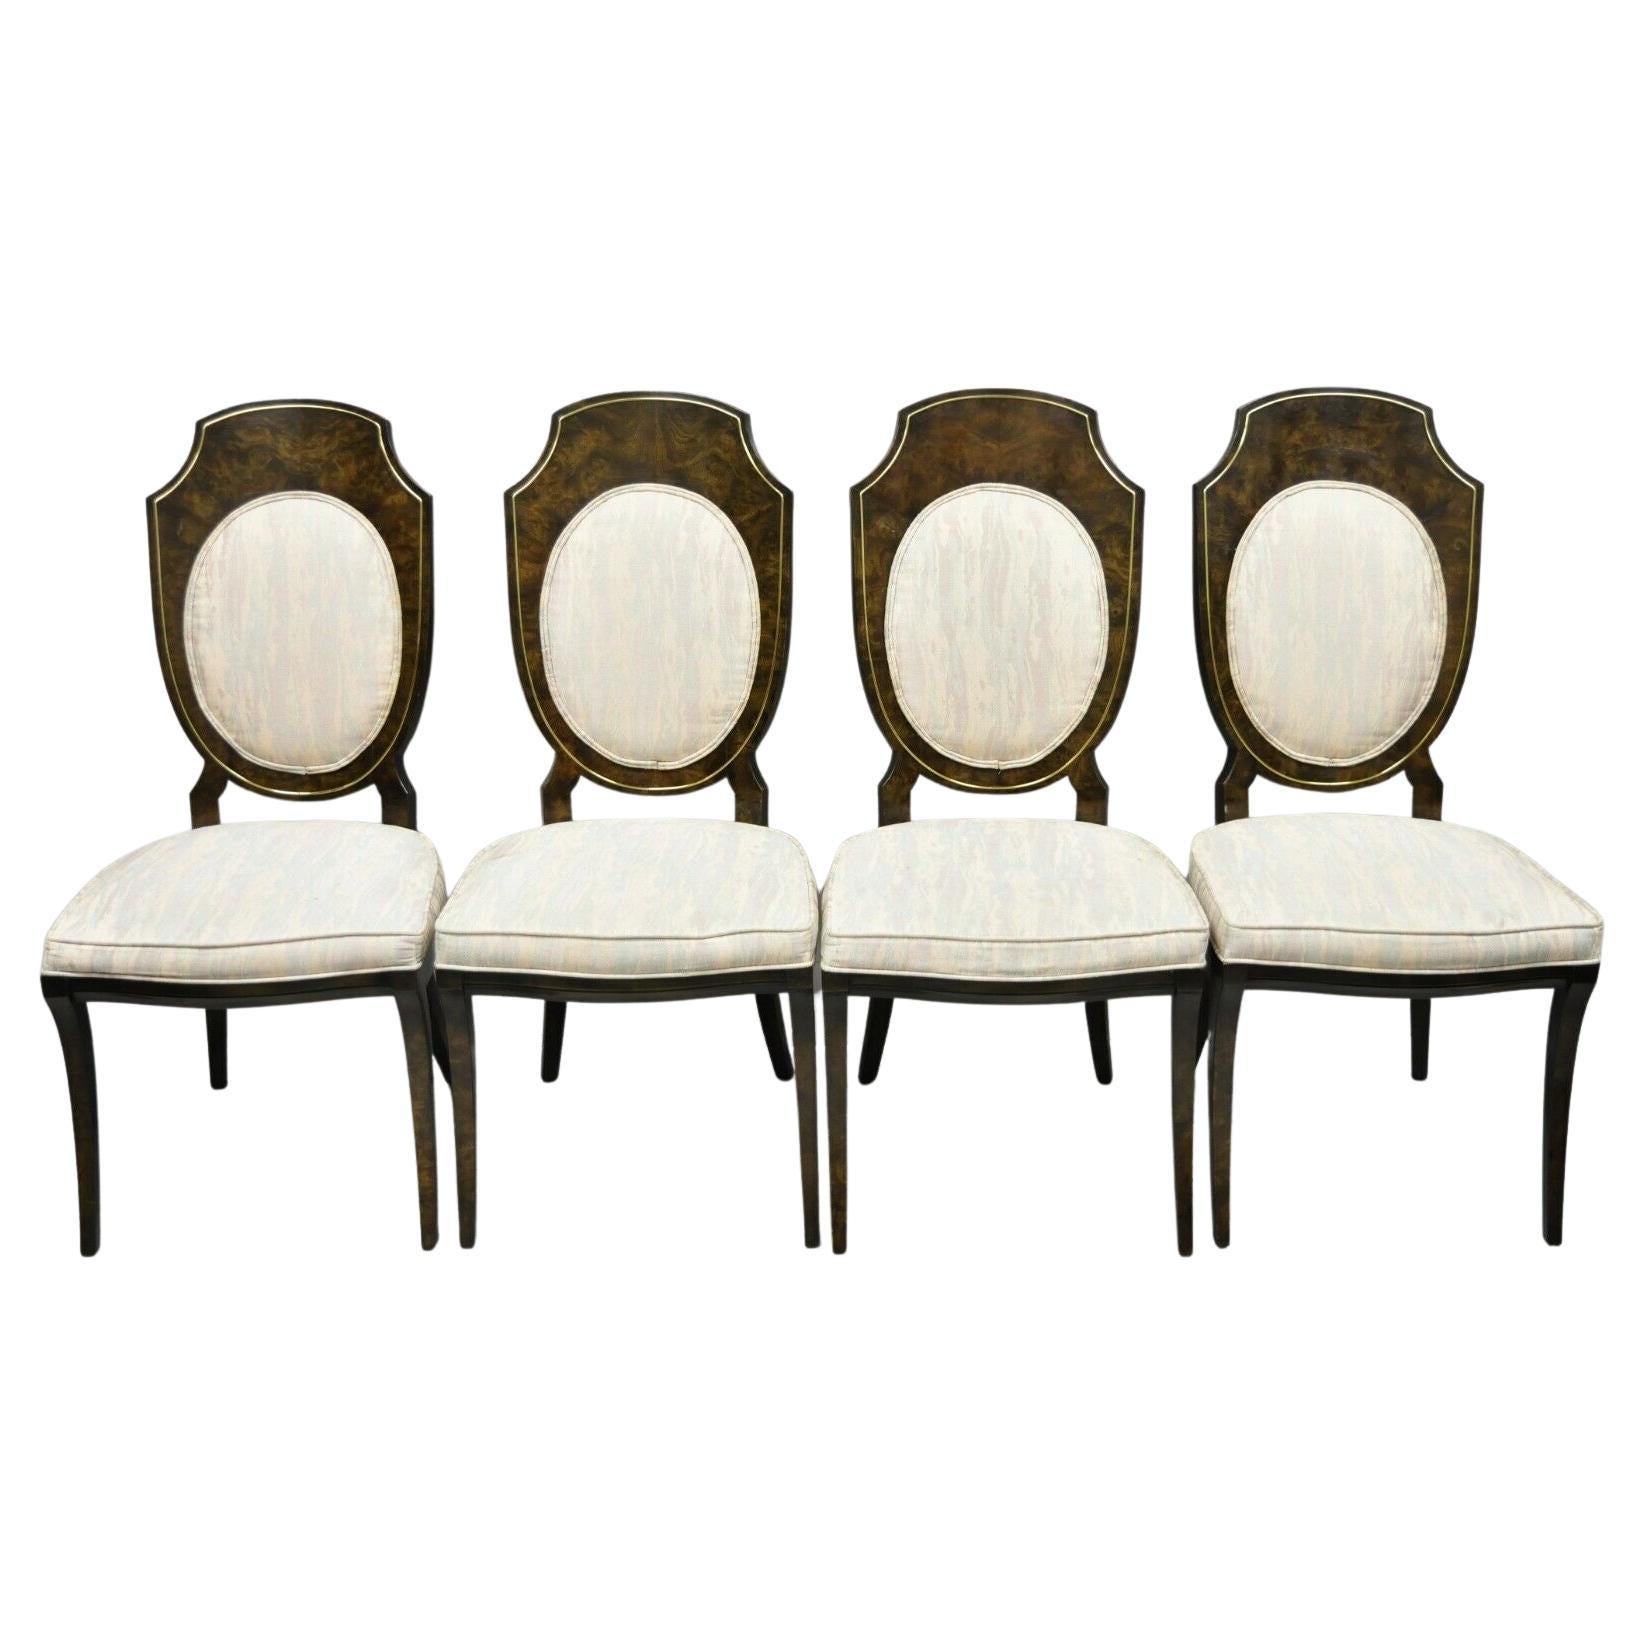 Mastercraft Amboyna Wood Brass Trim Oval Back Dining Chairs, Set of 4